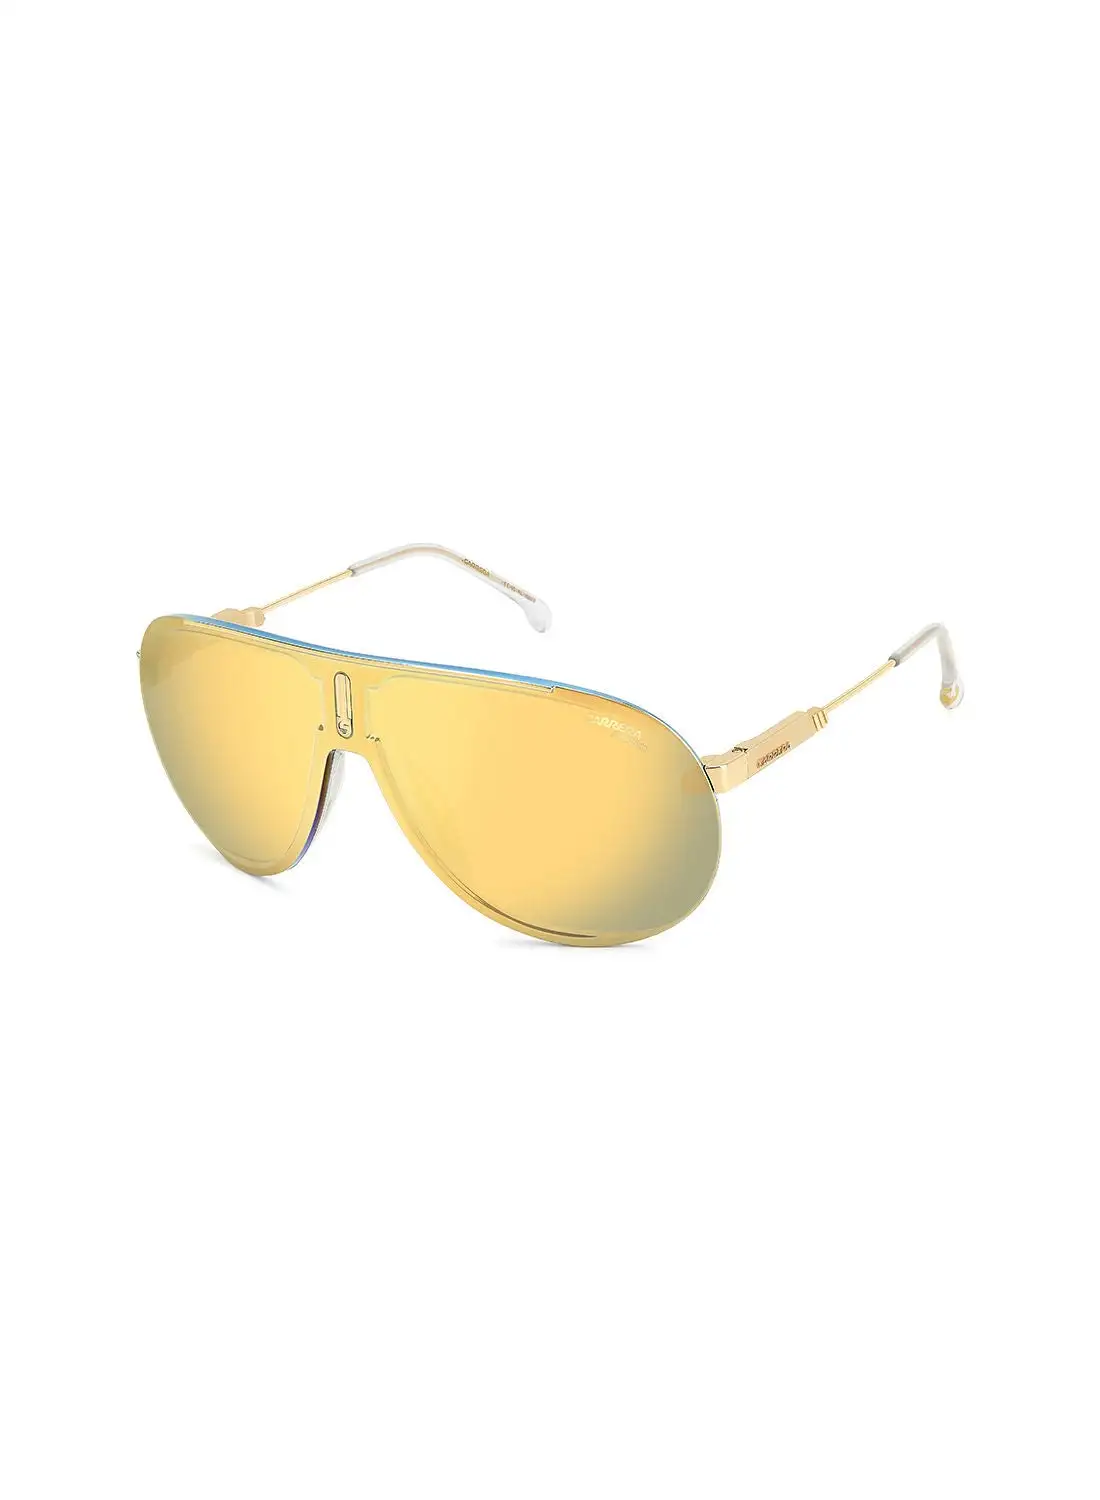 Carrera Unisex UV Protection Pilot Sunglasses - Super Champion Gold 99 - Lens Size: 99 Mm